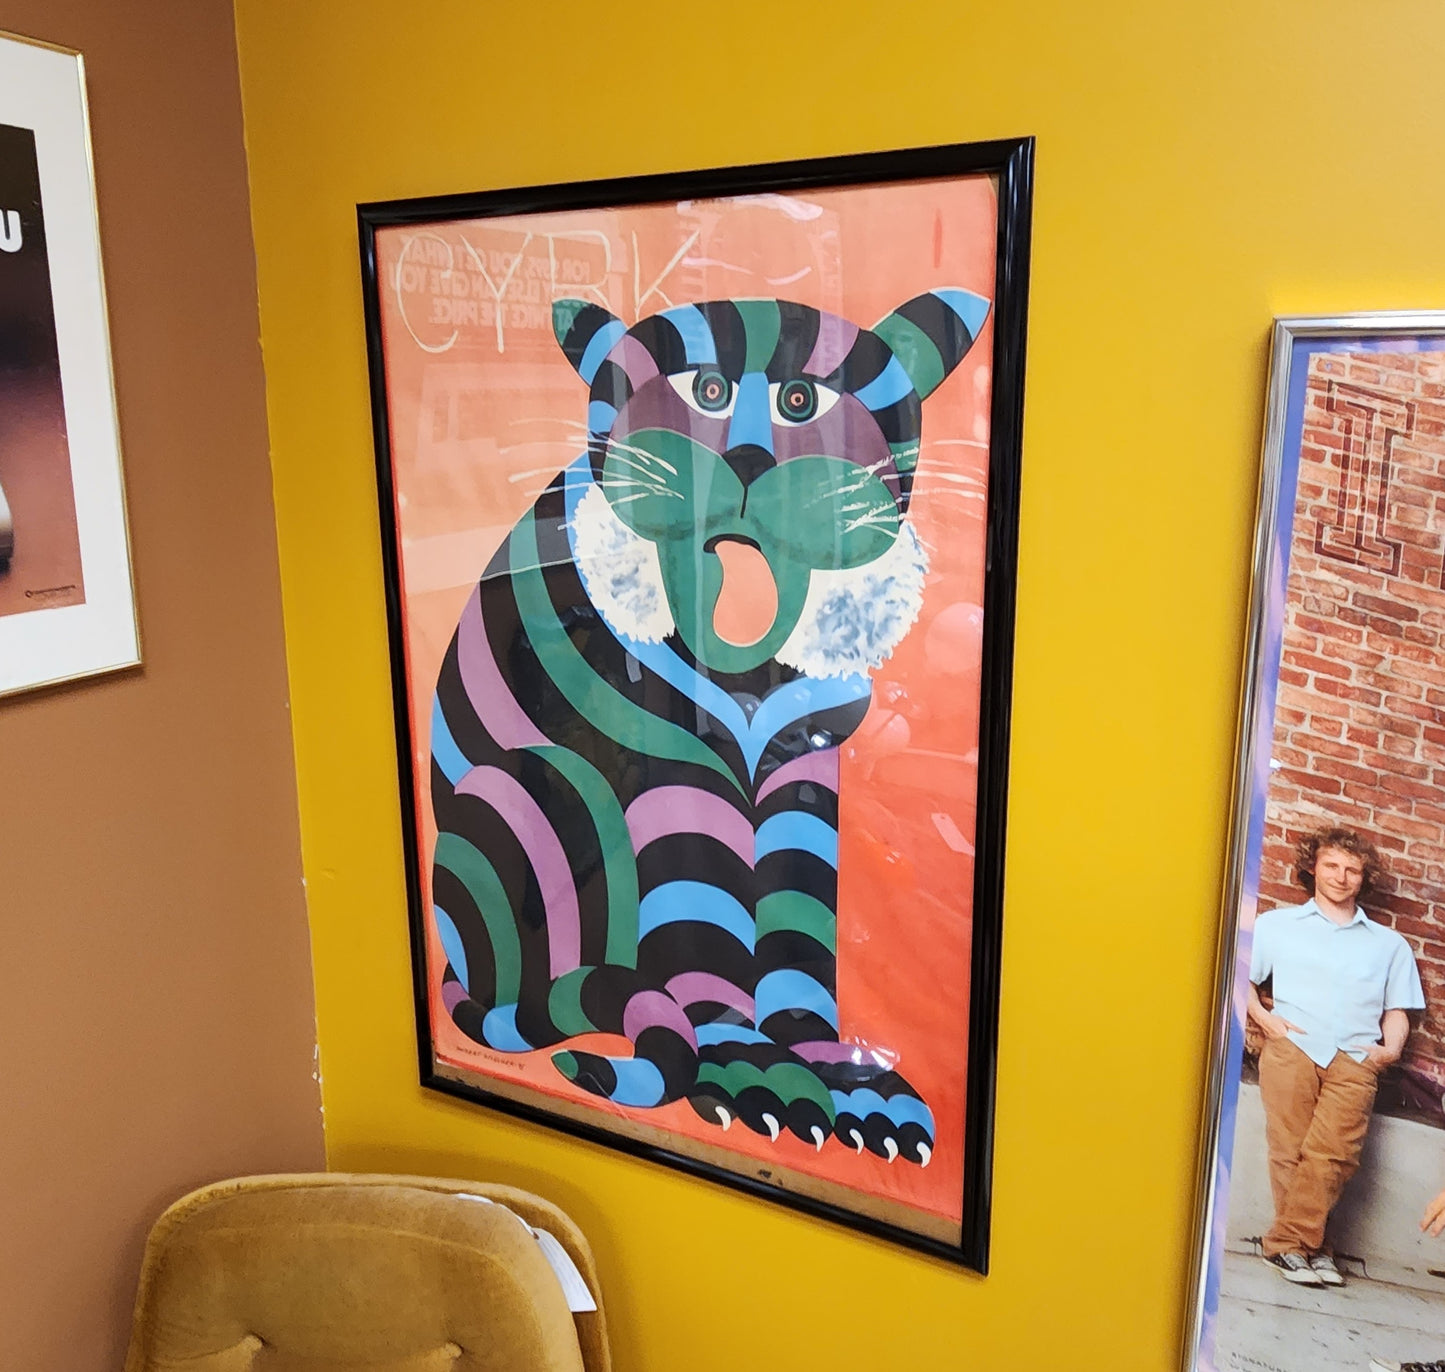 Cyrk Polish Circus Striped Tiger Print Poster by Hubert Hilscher